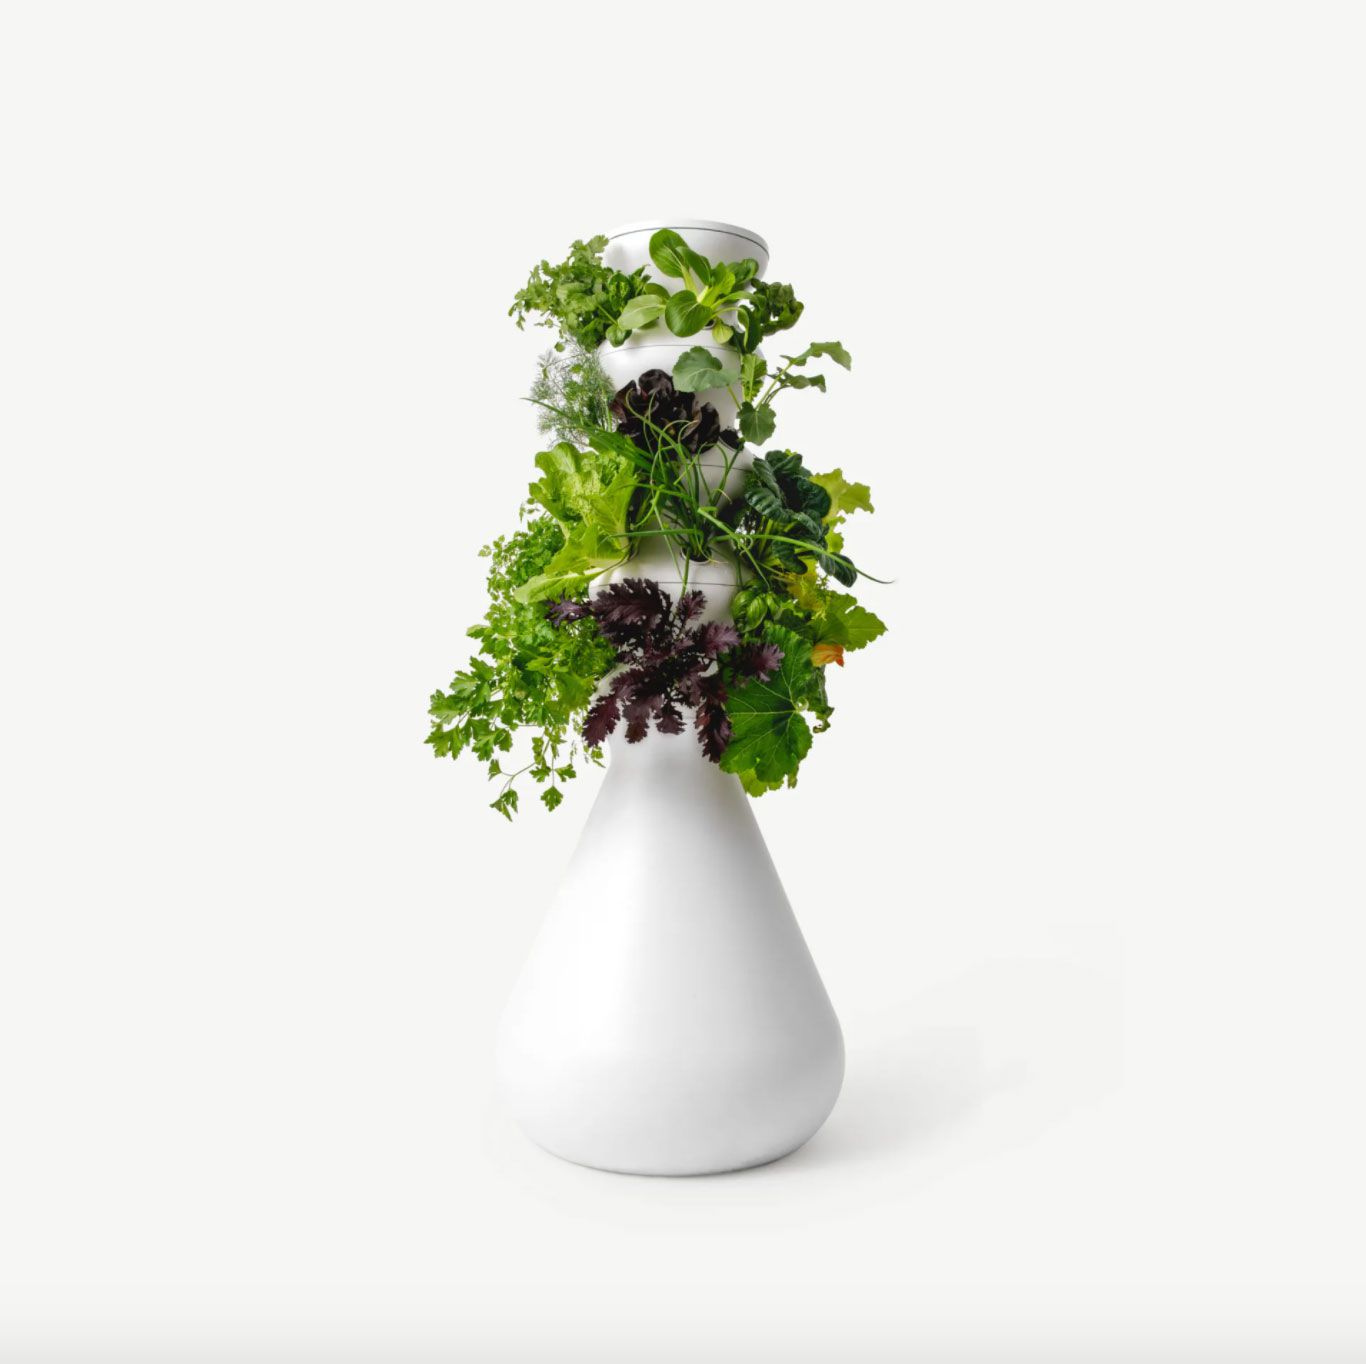 farmstand-lettuce-grower-kris-jenner-holiday-gift